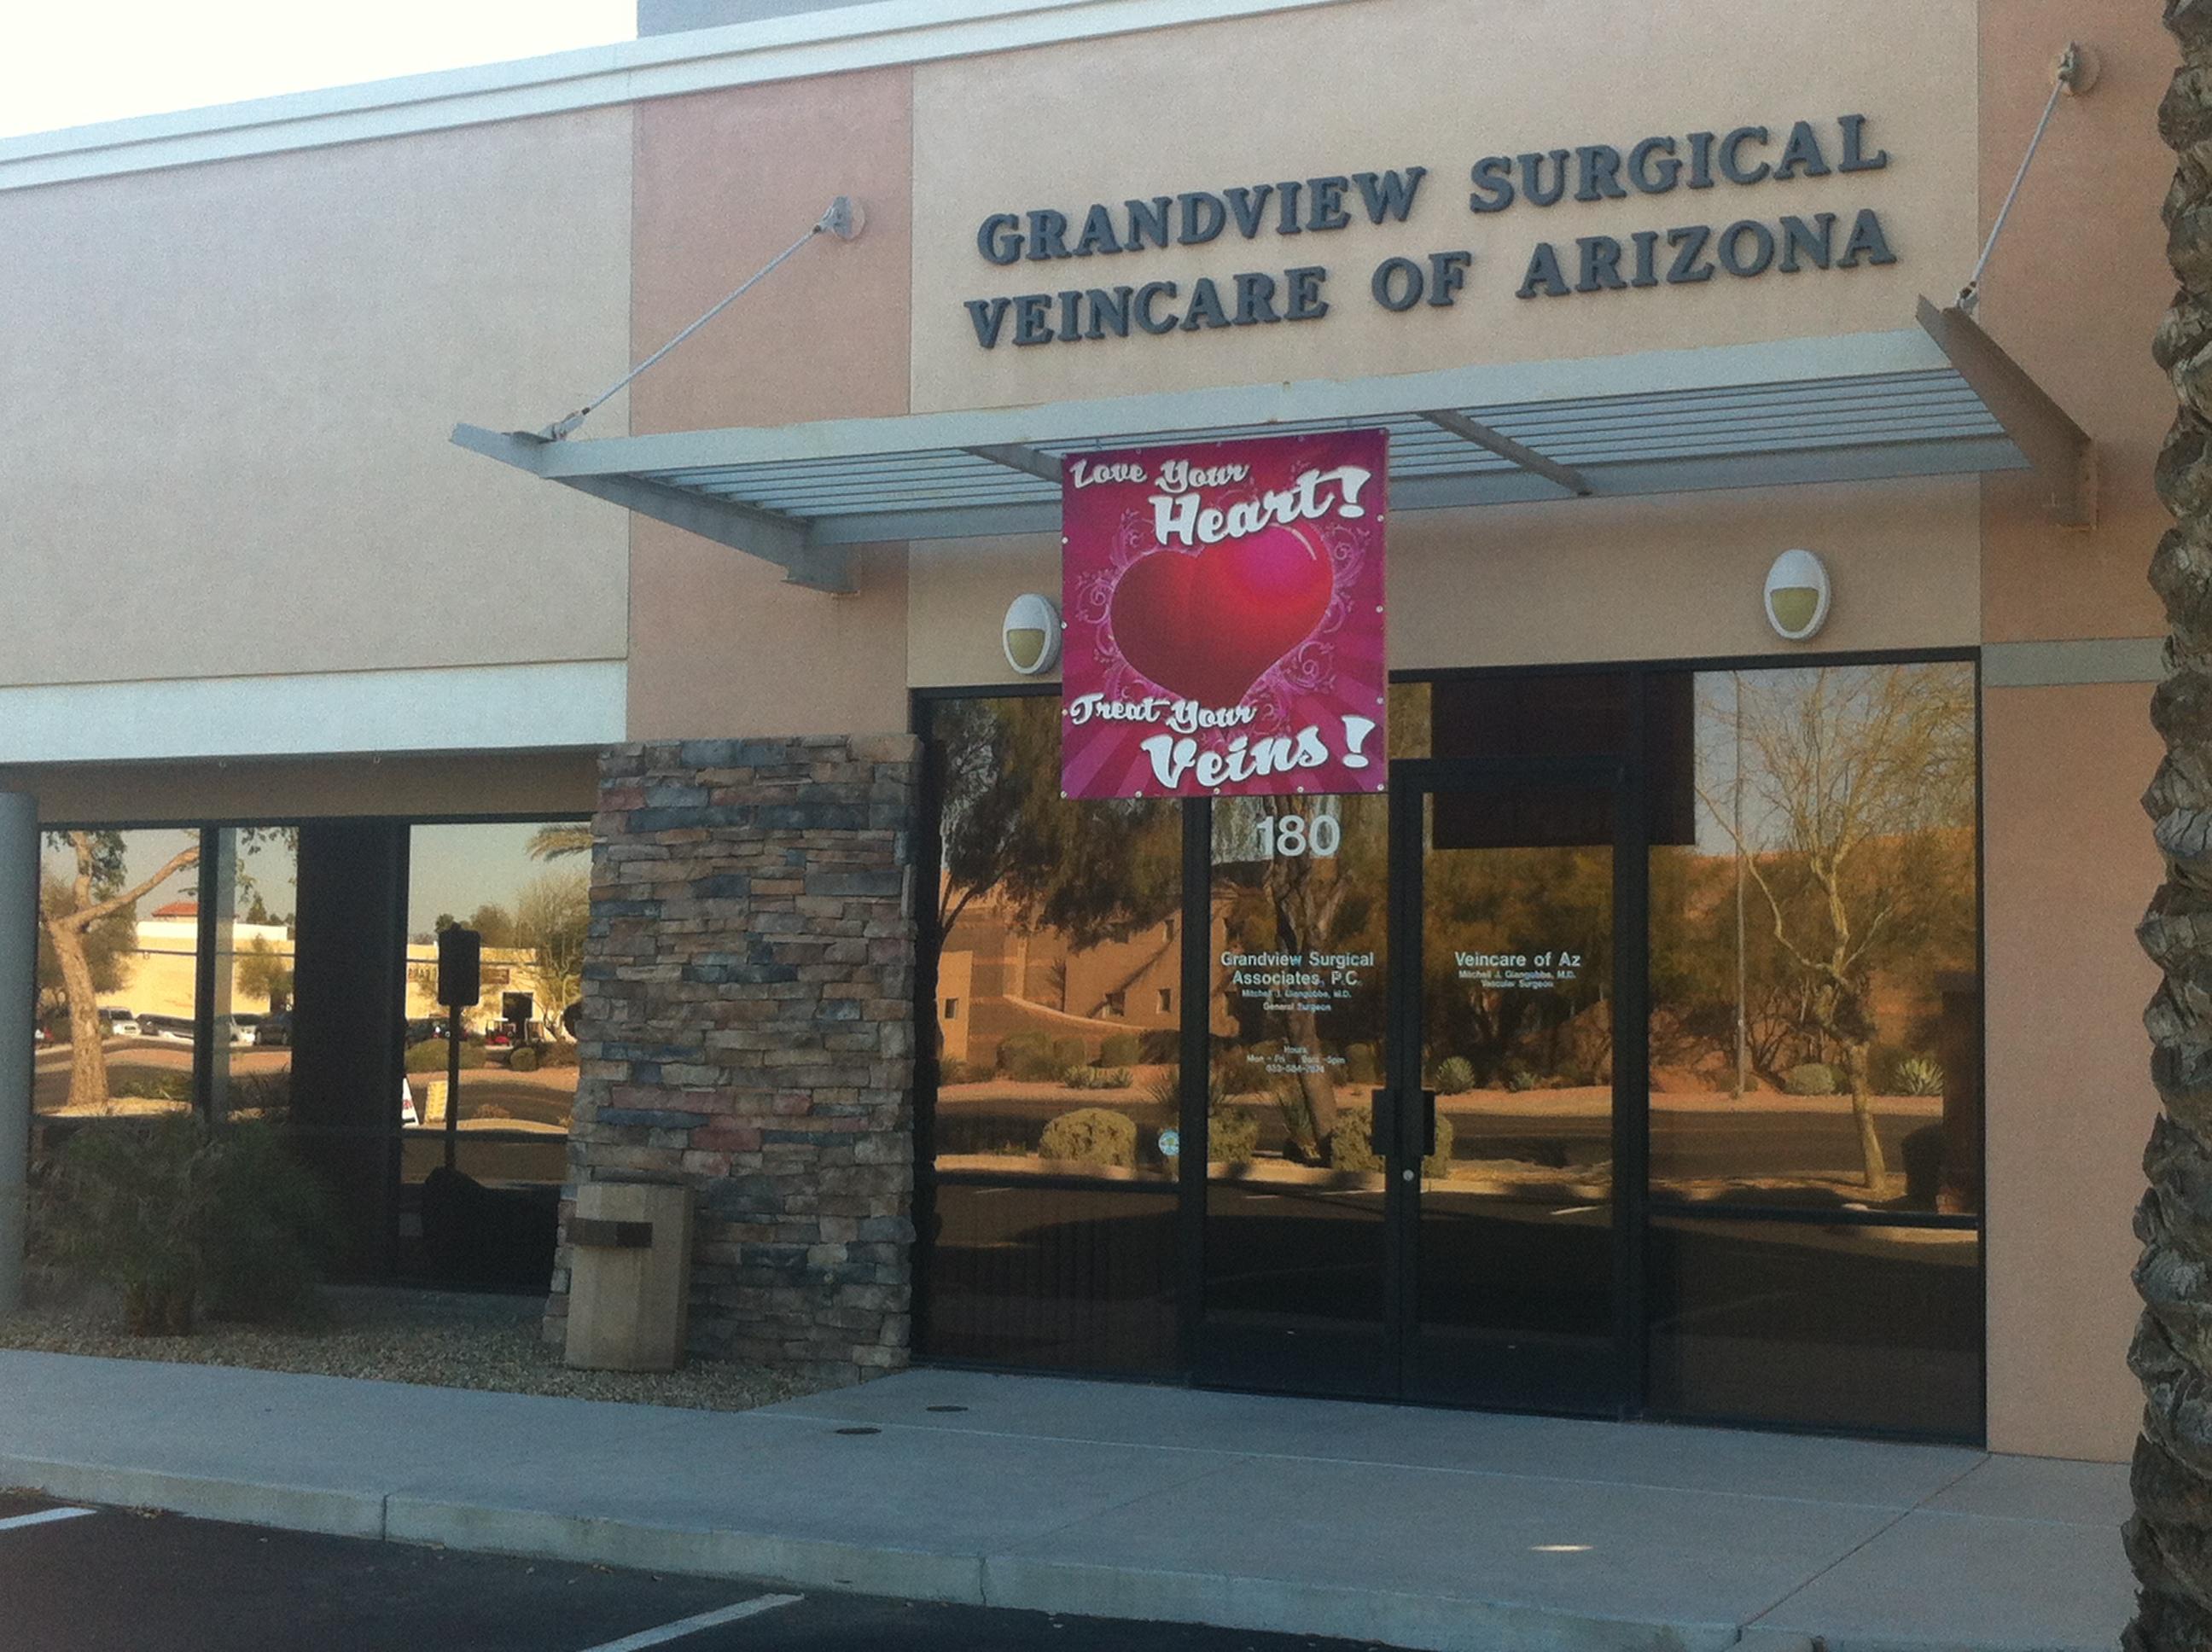 Habla español? Sea bienvenido de Veincare de Arizona Veincare of Arizona Sun City West (623)584-7874